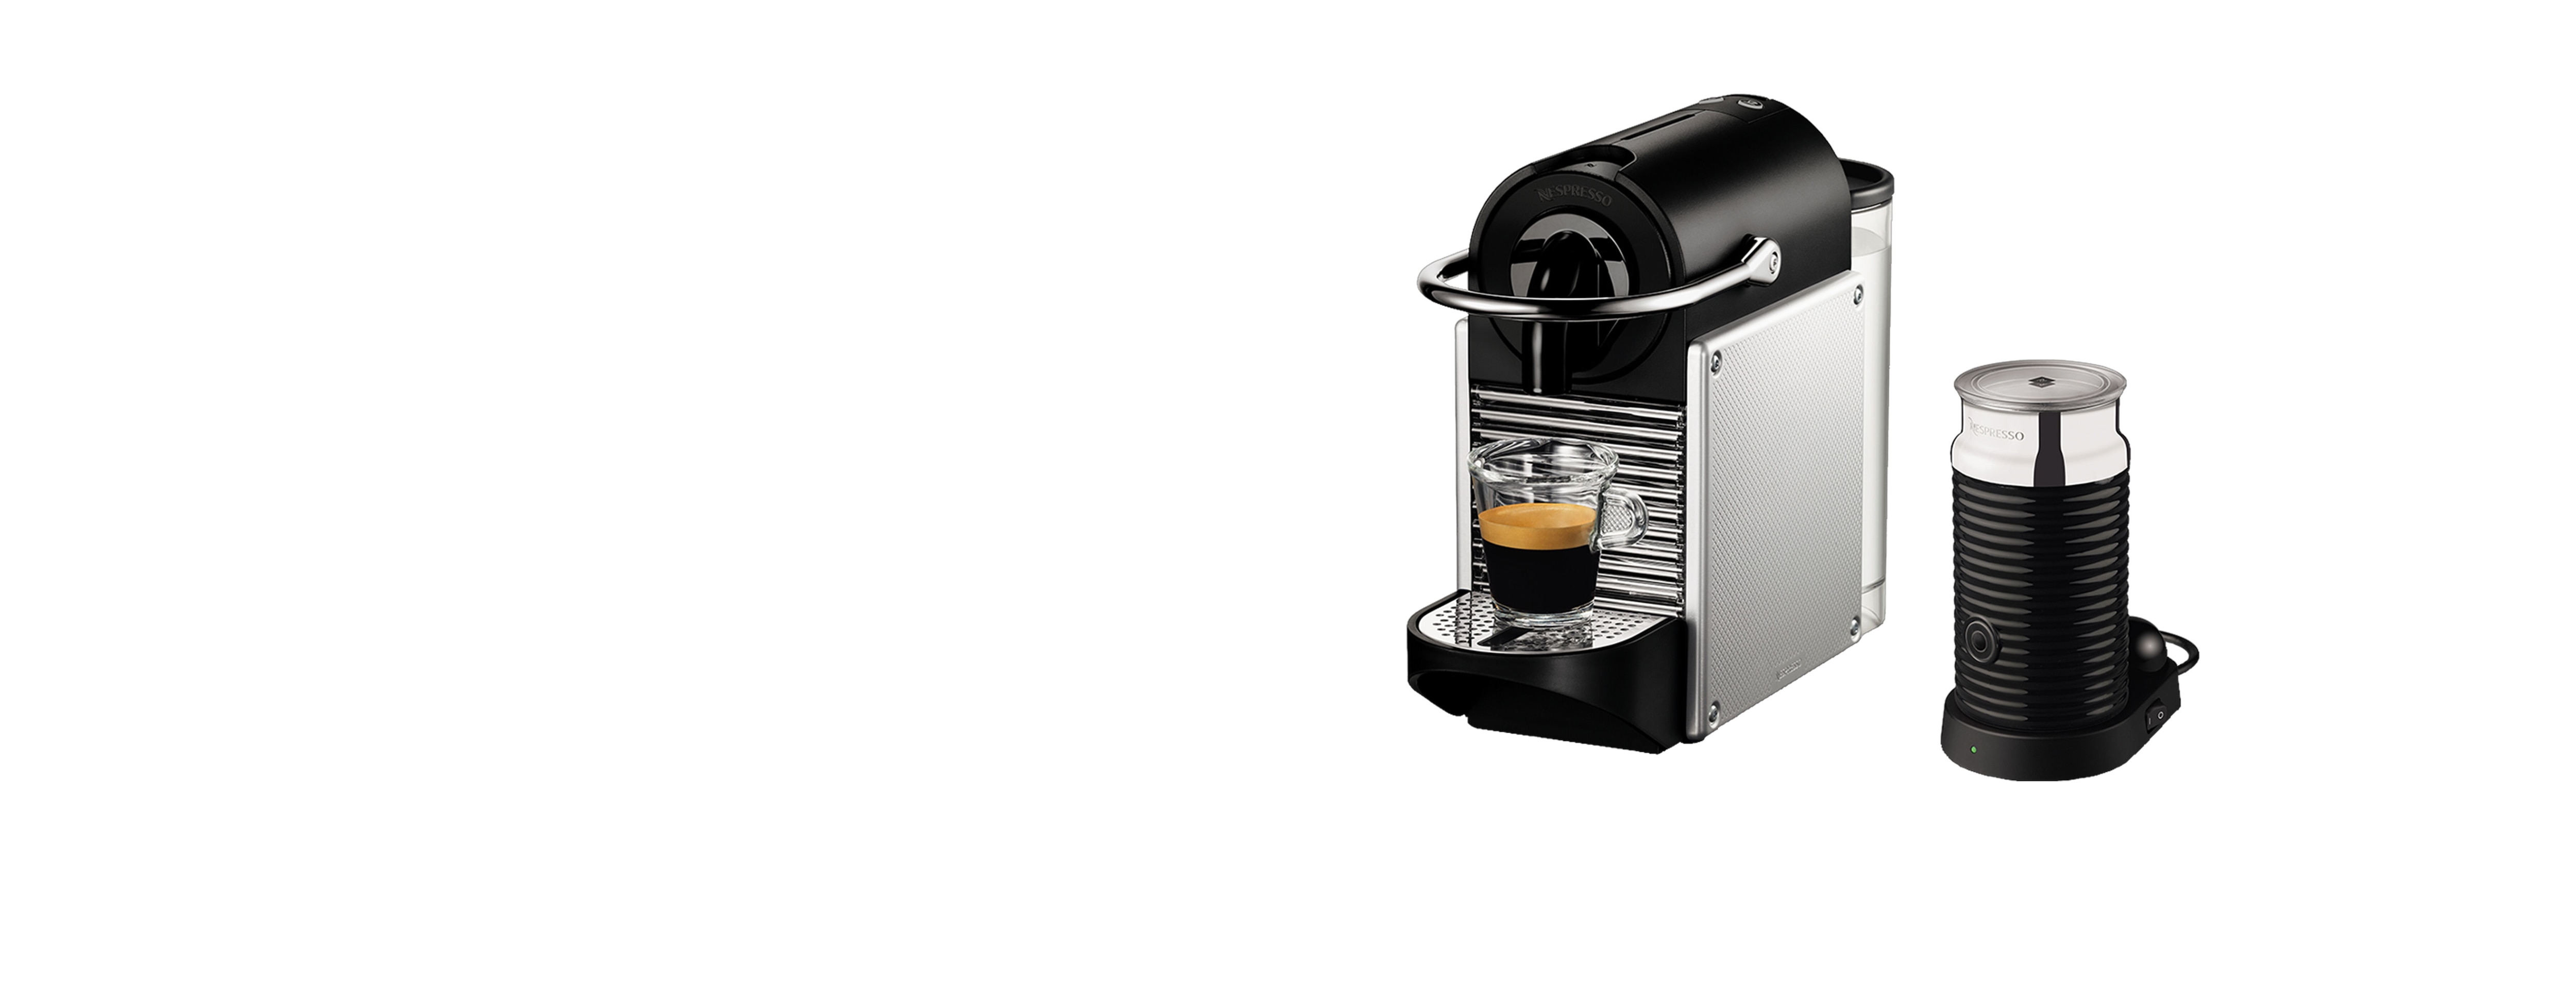 Nespresso Pixie Coffee Machine with Aeroccino by Magimix, Steel